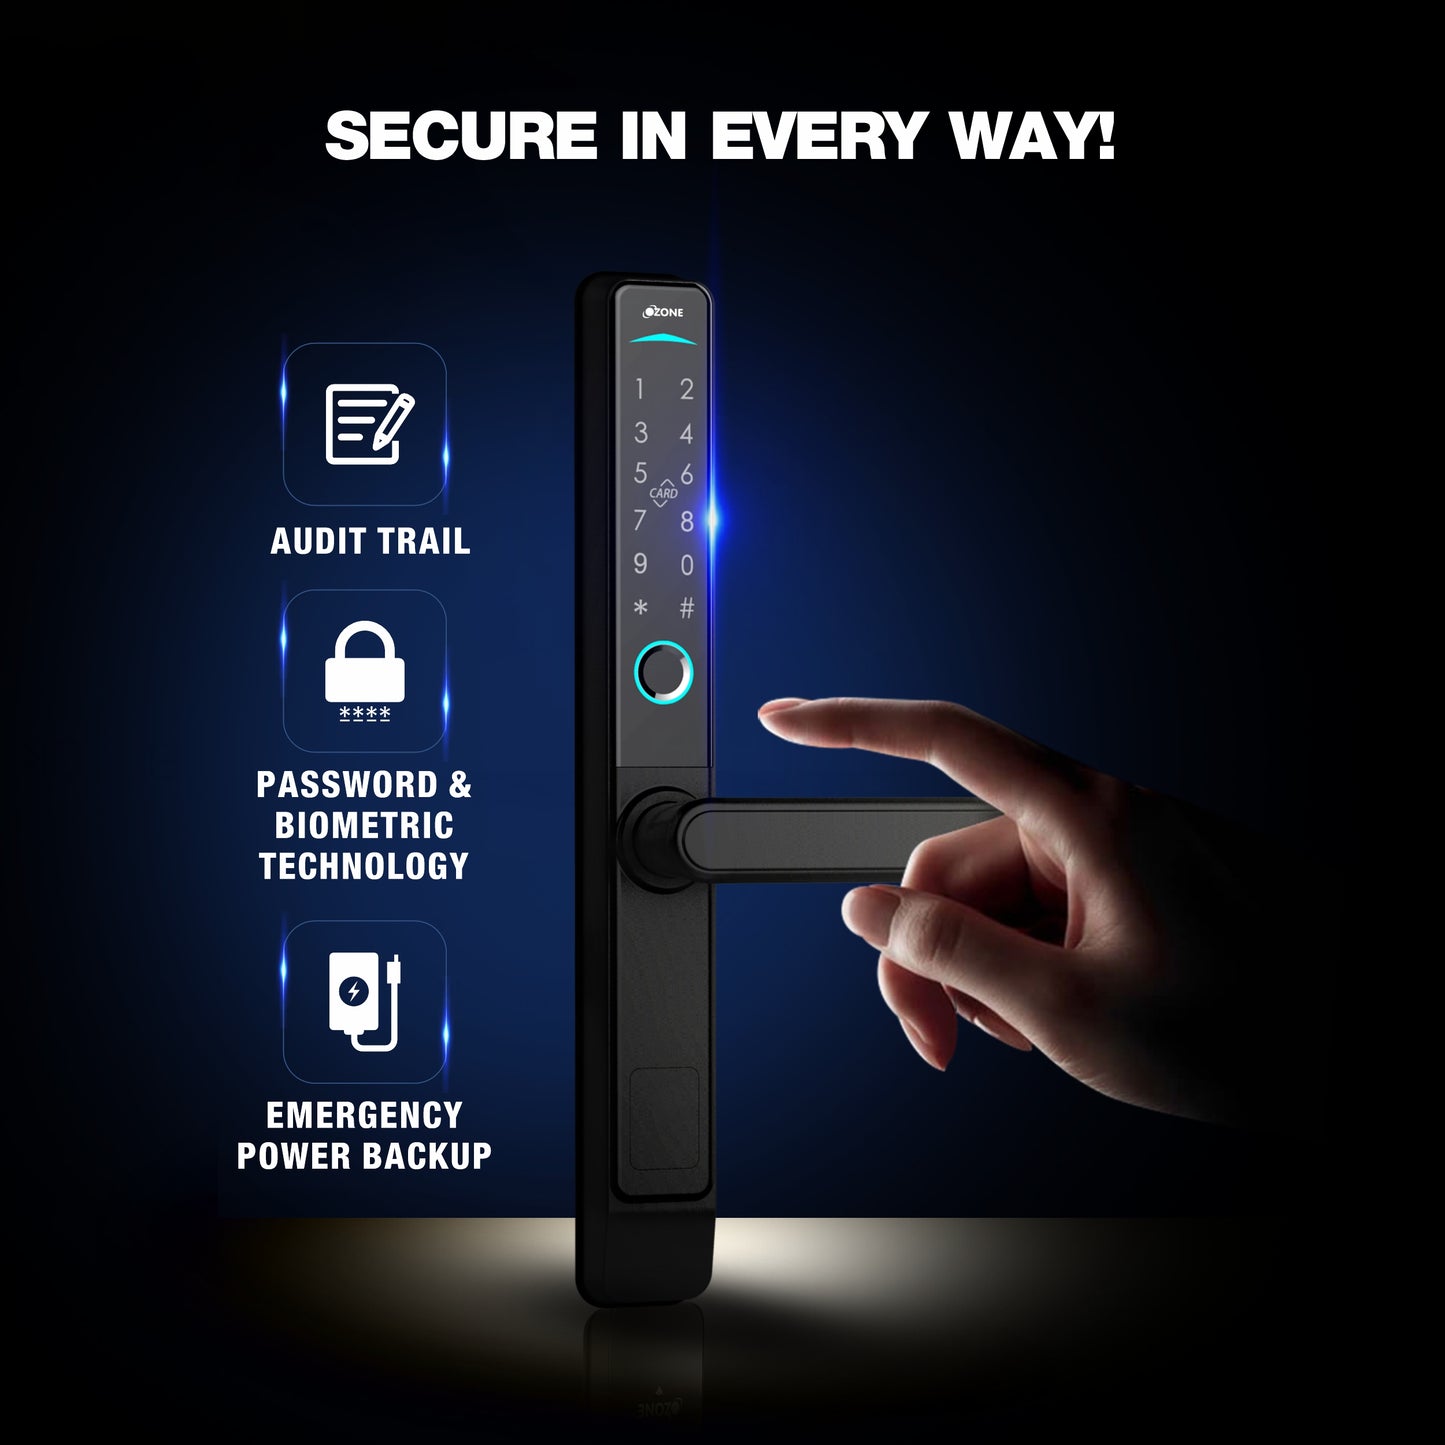 Narrow Style Smart Lock (SL) with 5-way Unlock for Internal Doors | Free Installation | Door Thickness: 35-80 mm